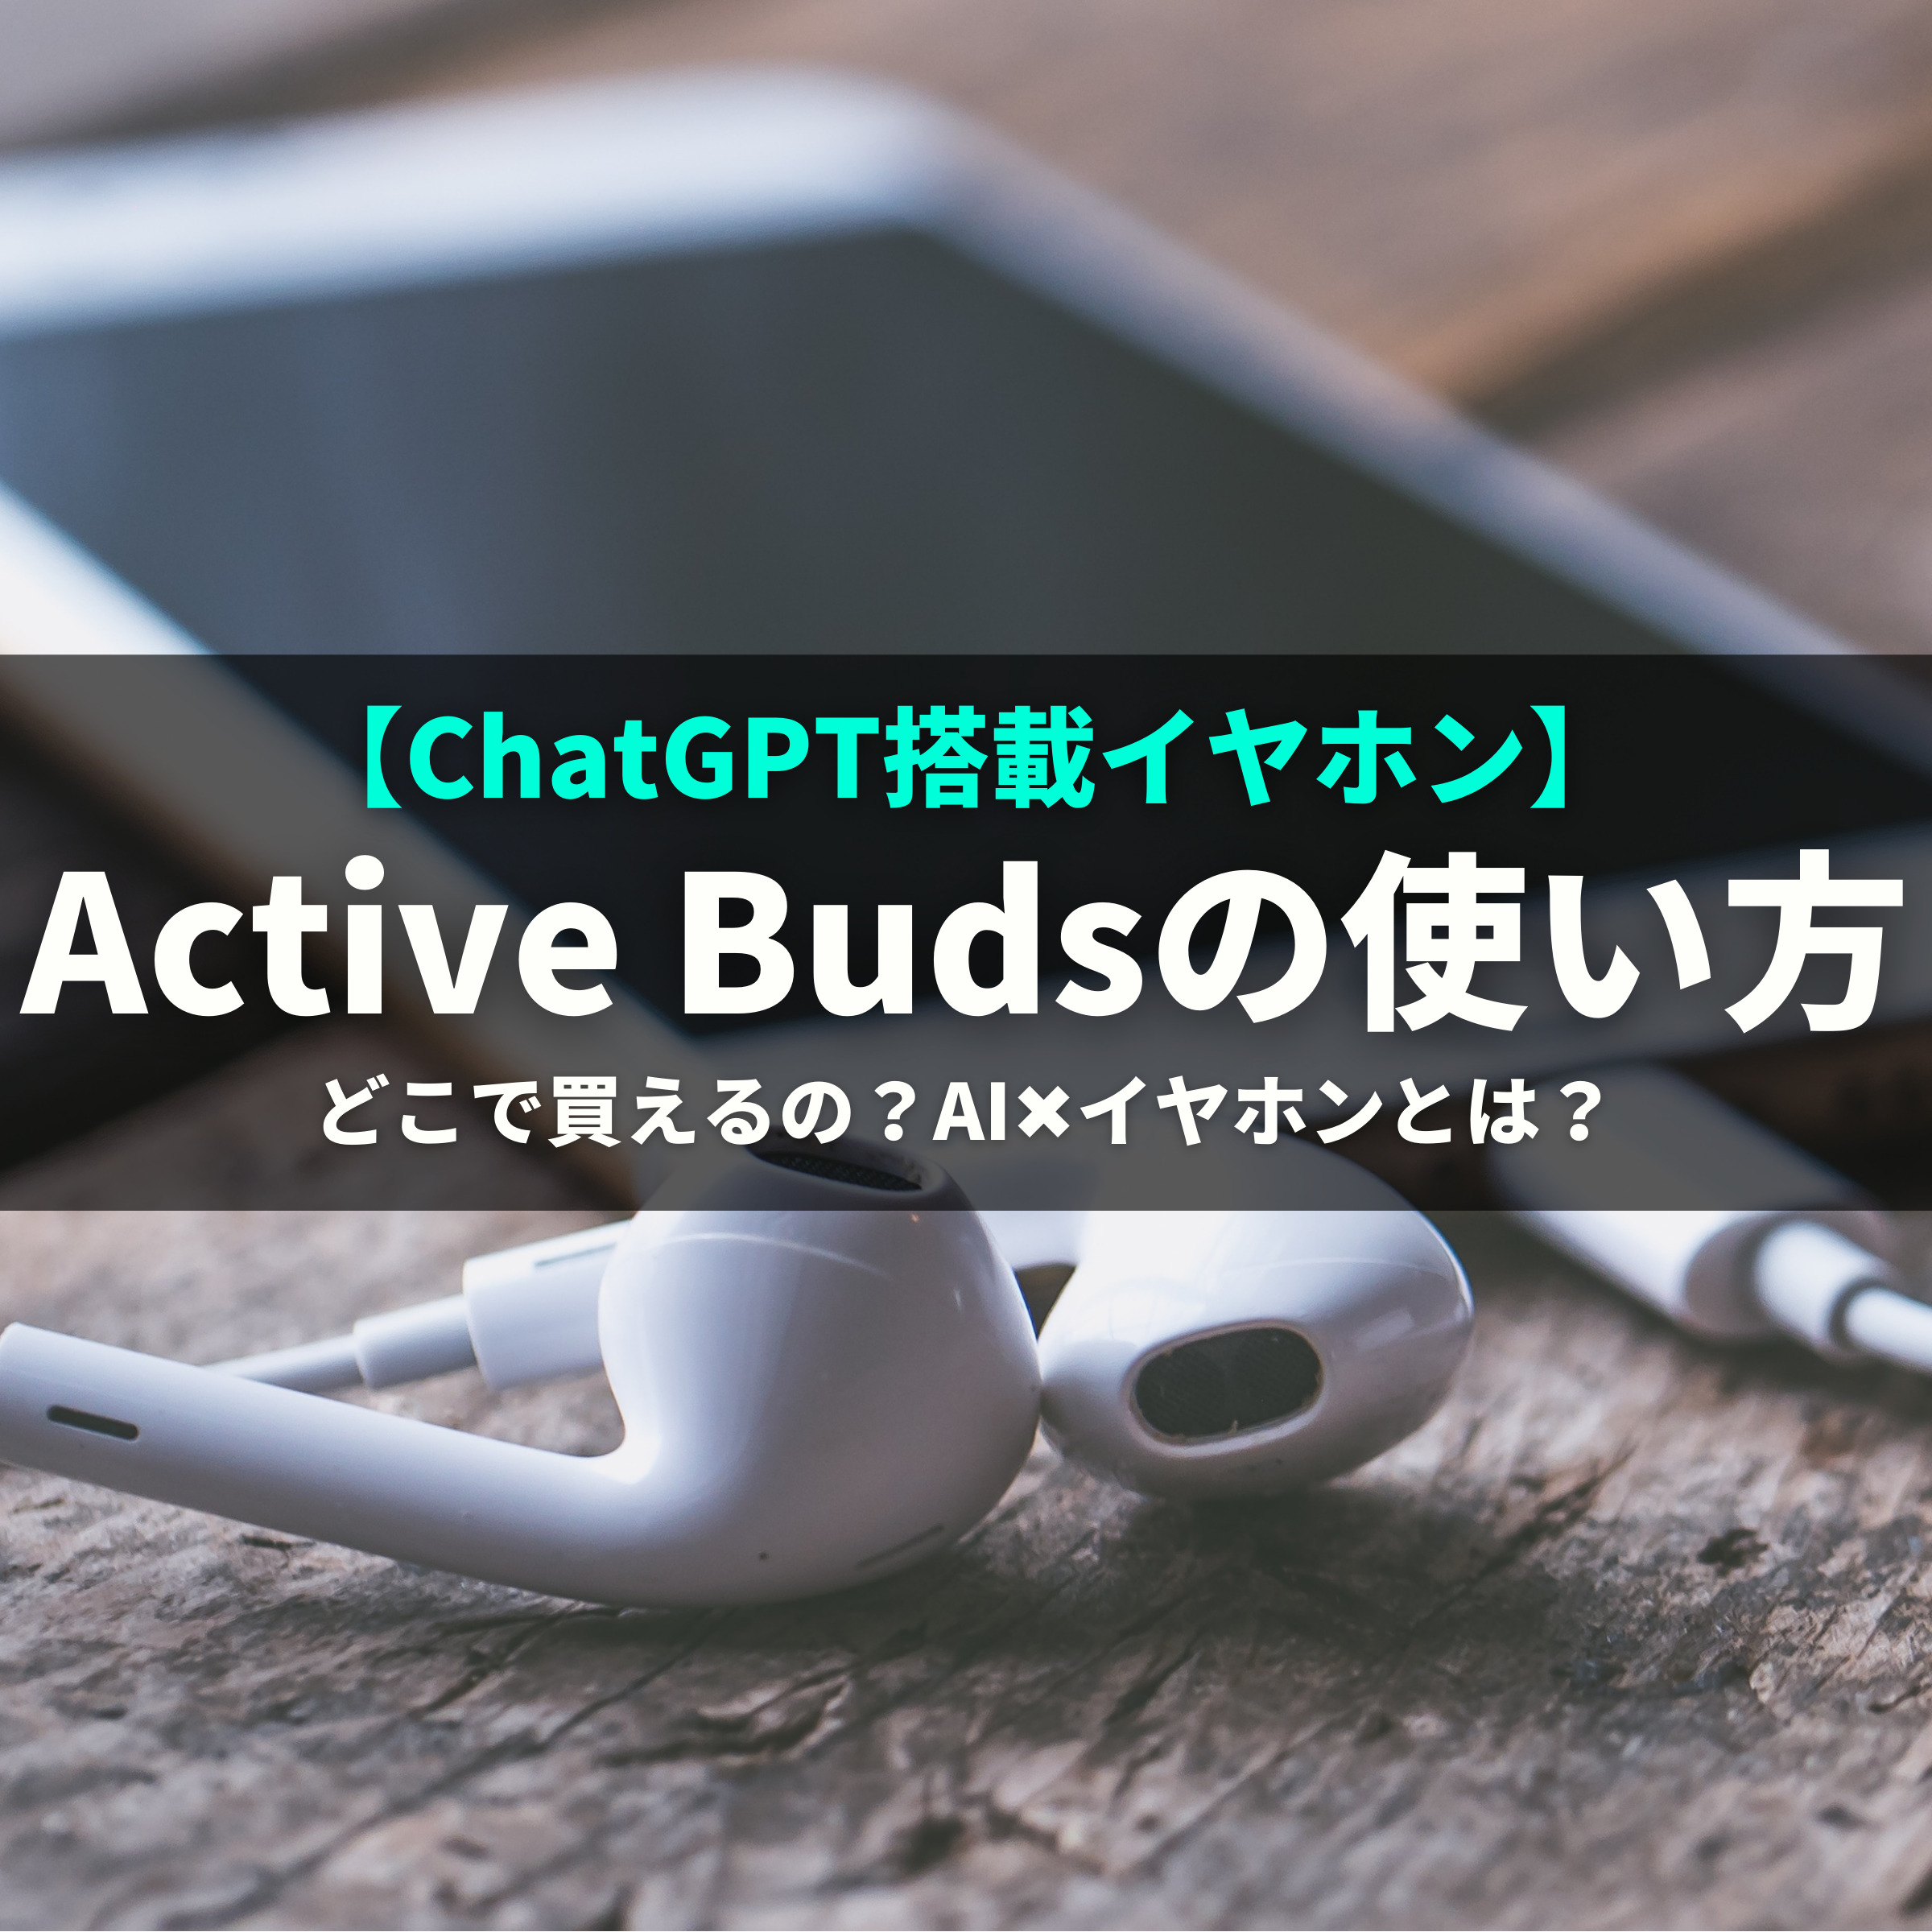 ChatGPT搭載の多機能イヤホン「Active Buds」について解説 - AILANDs 